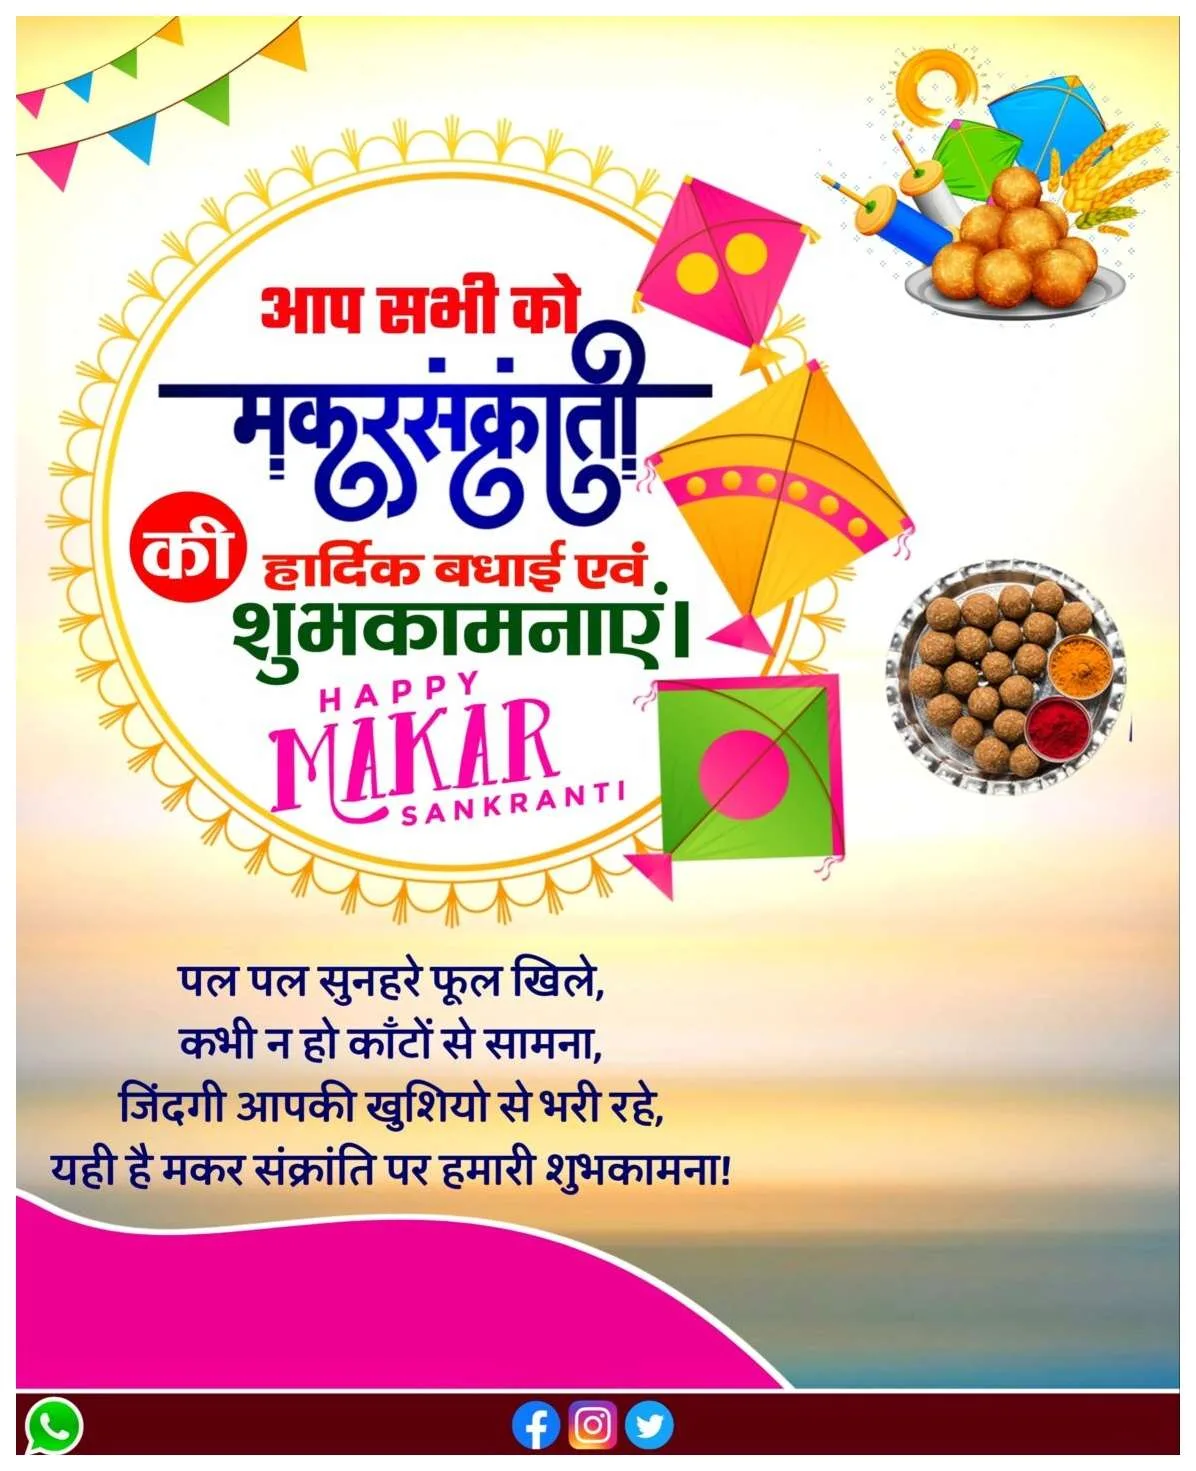 Happy Makar Sankranti Poster in Hindi